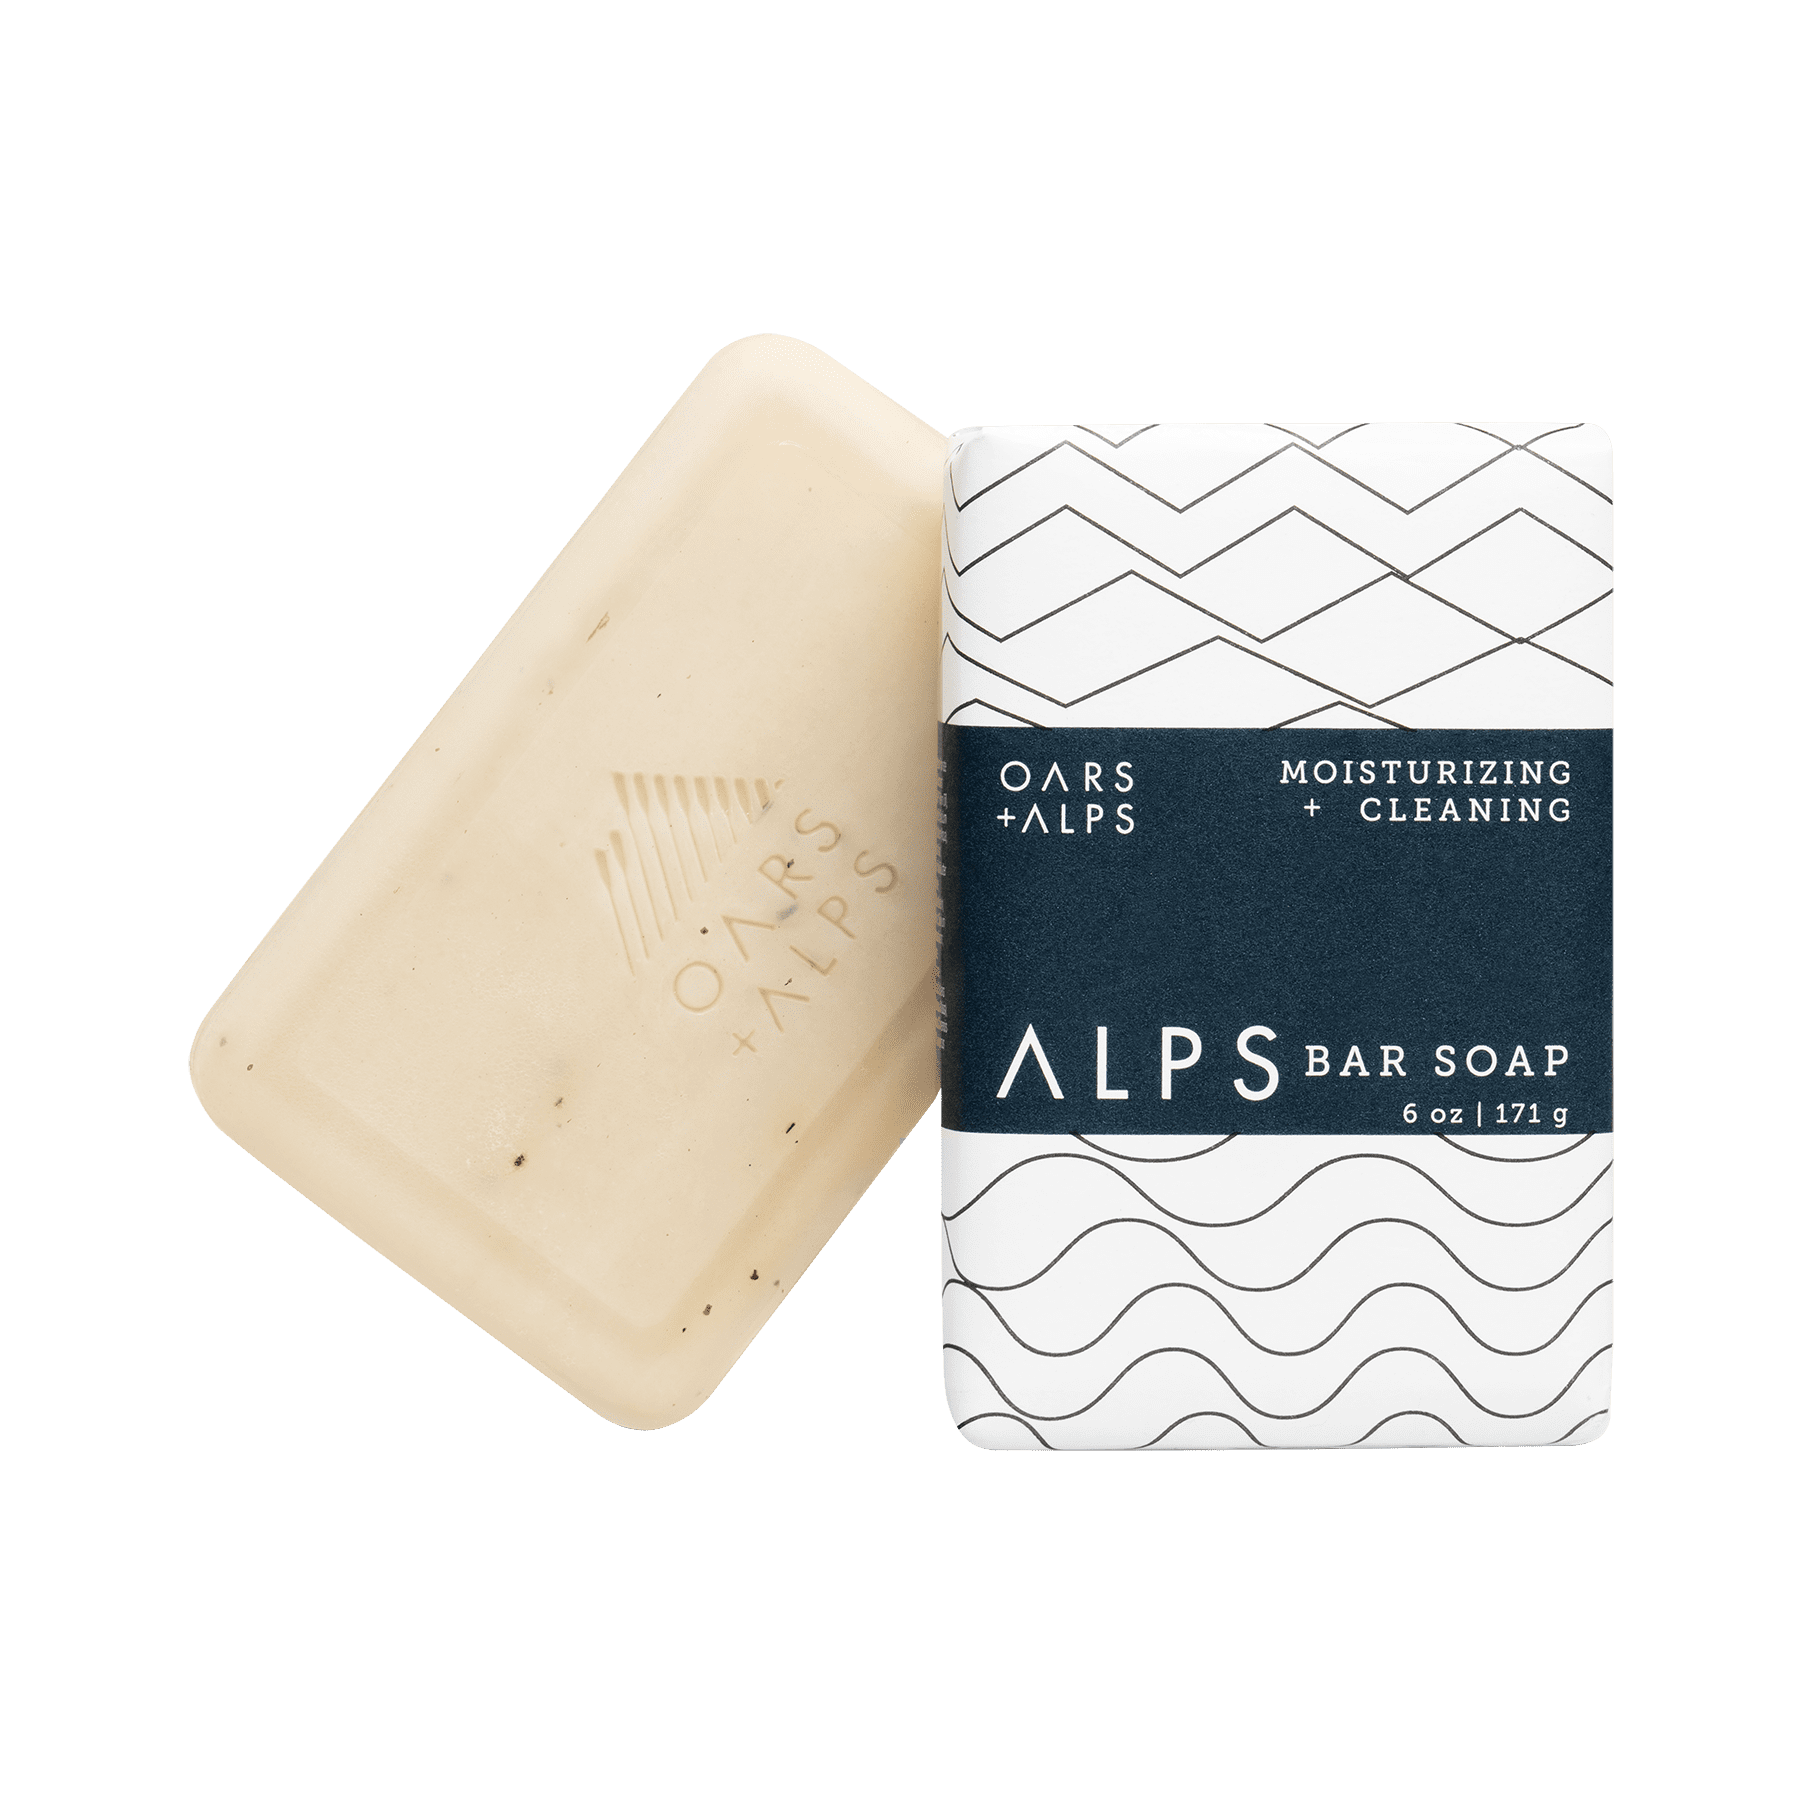 Moisturizing Alps Bar Soap